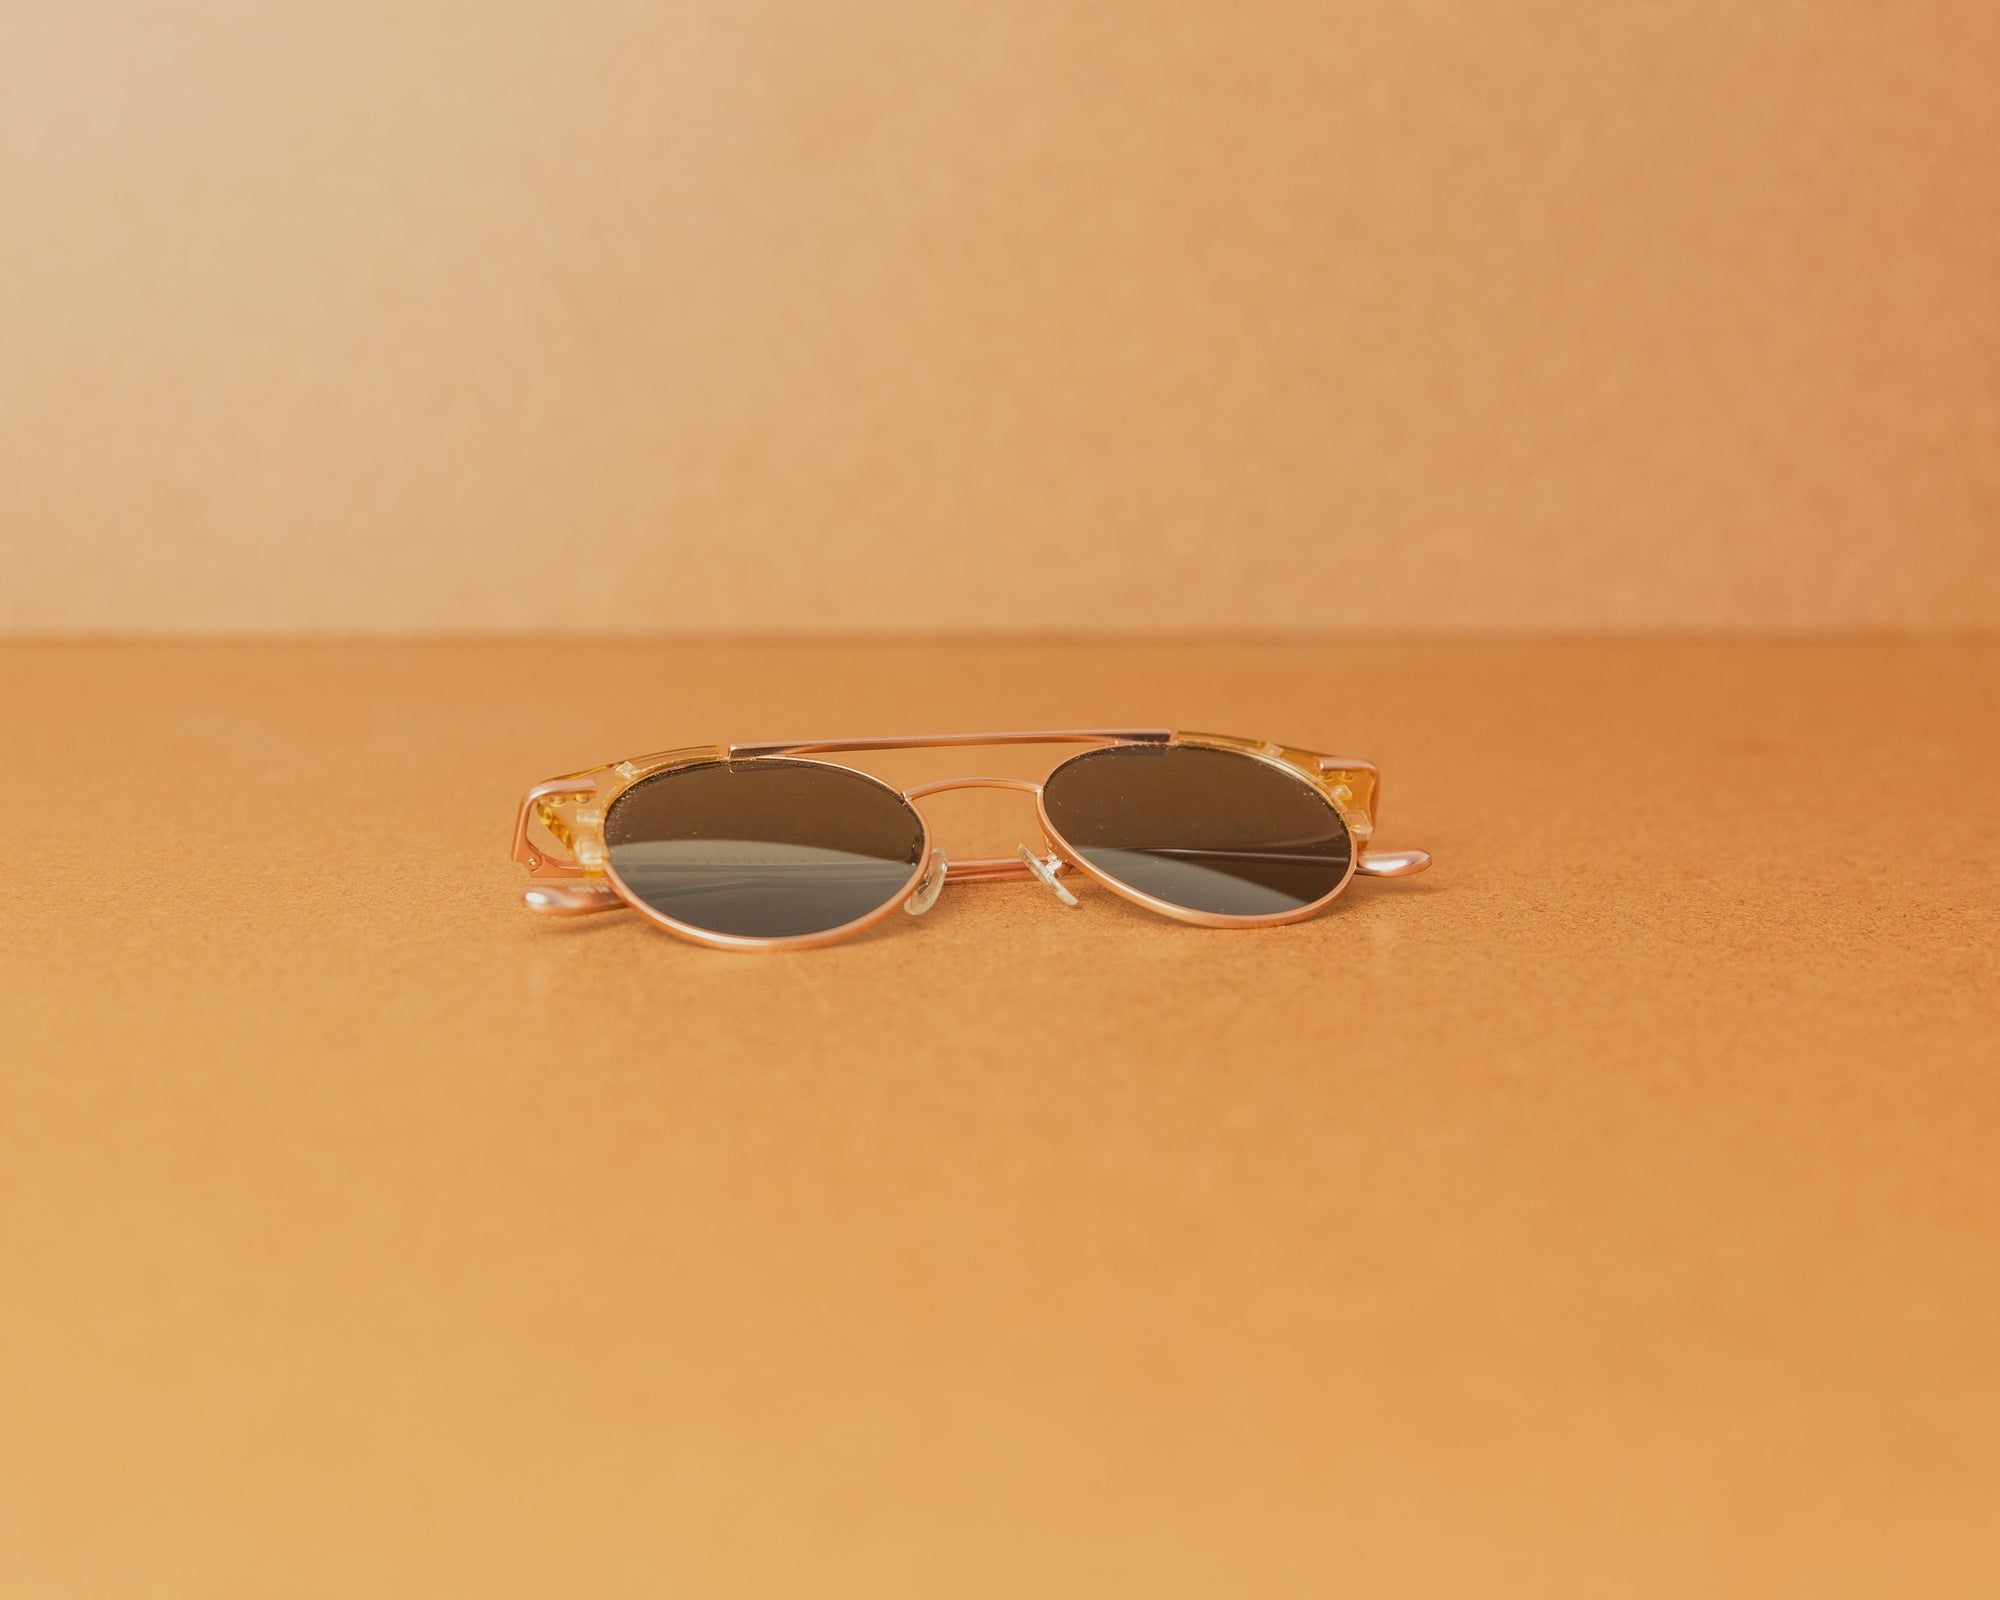 Wonderland Rialto Sunglasses in Clear Beach Glass/Green